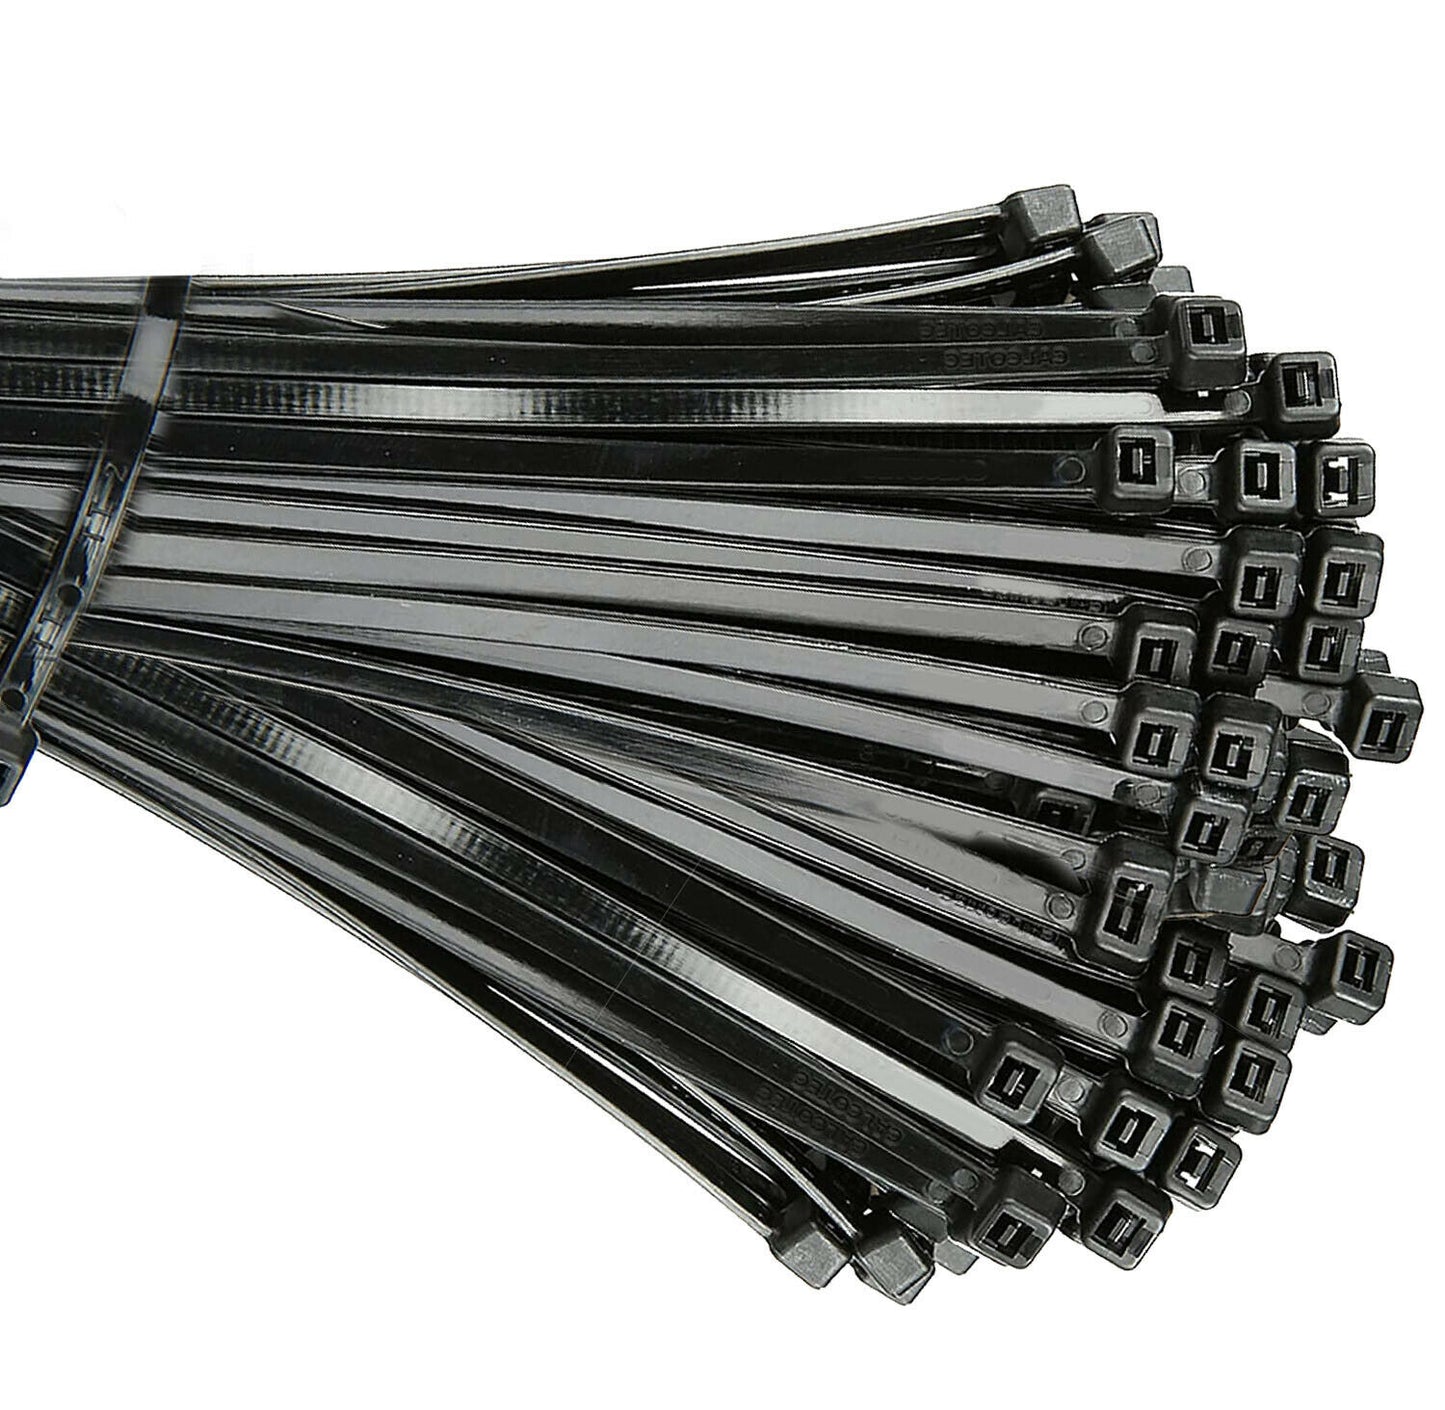 100 bridas para cables, bridas para cables de 12 pulgadas de largo, envoltura de cordón de nailon súper fuerte, color negro